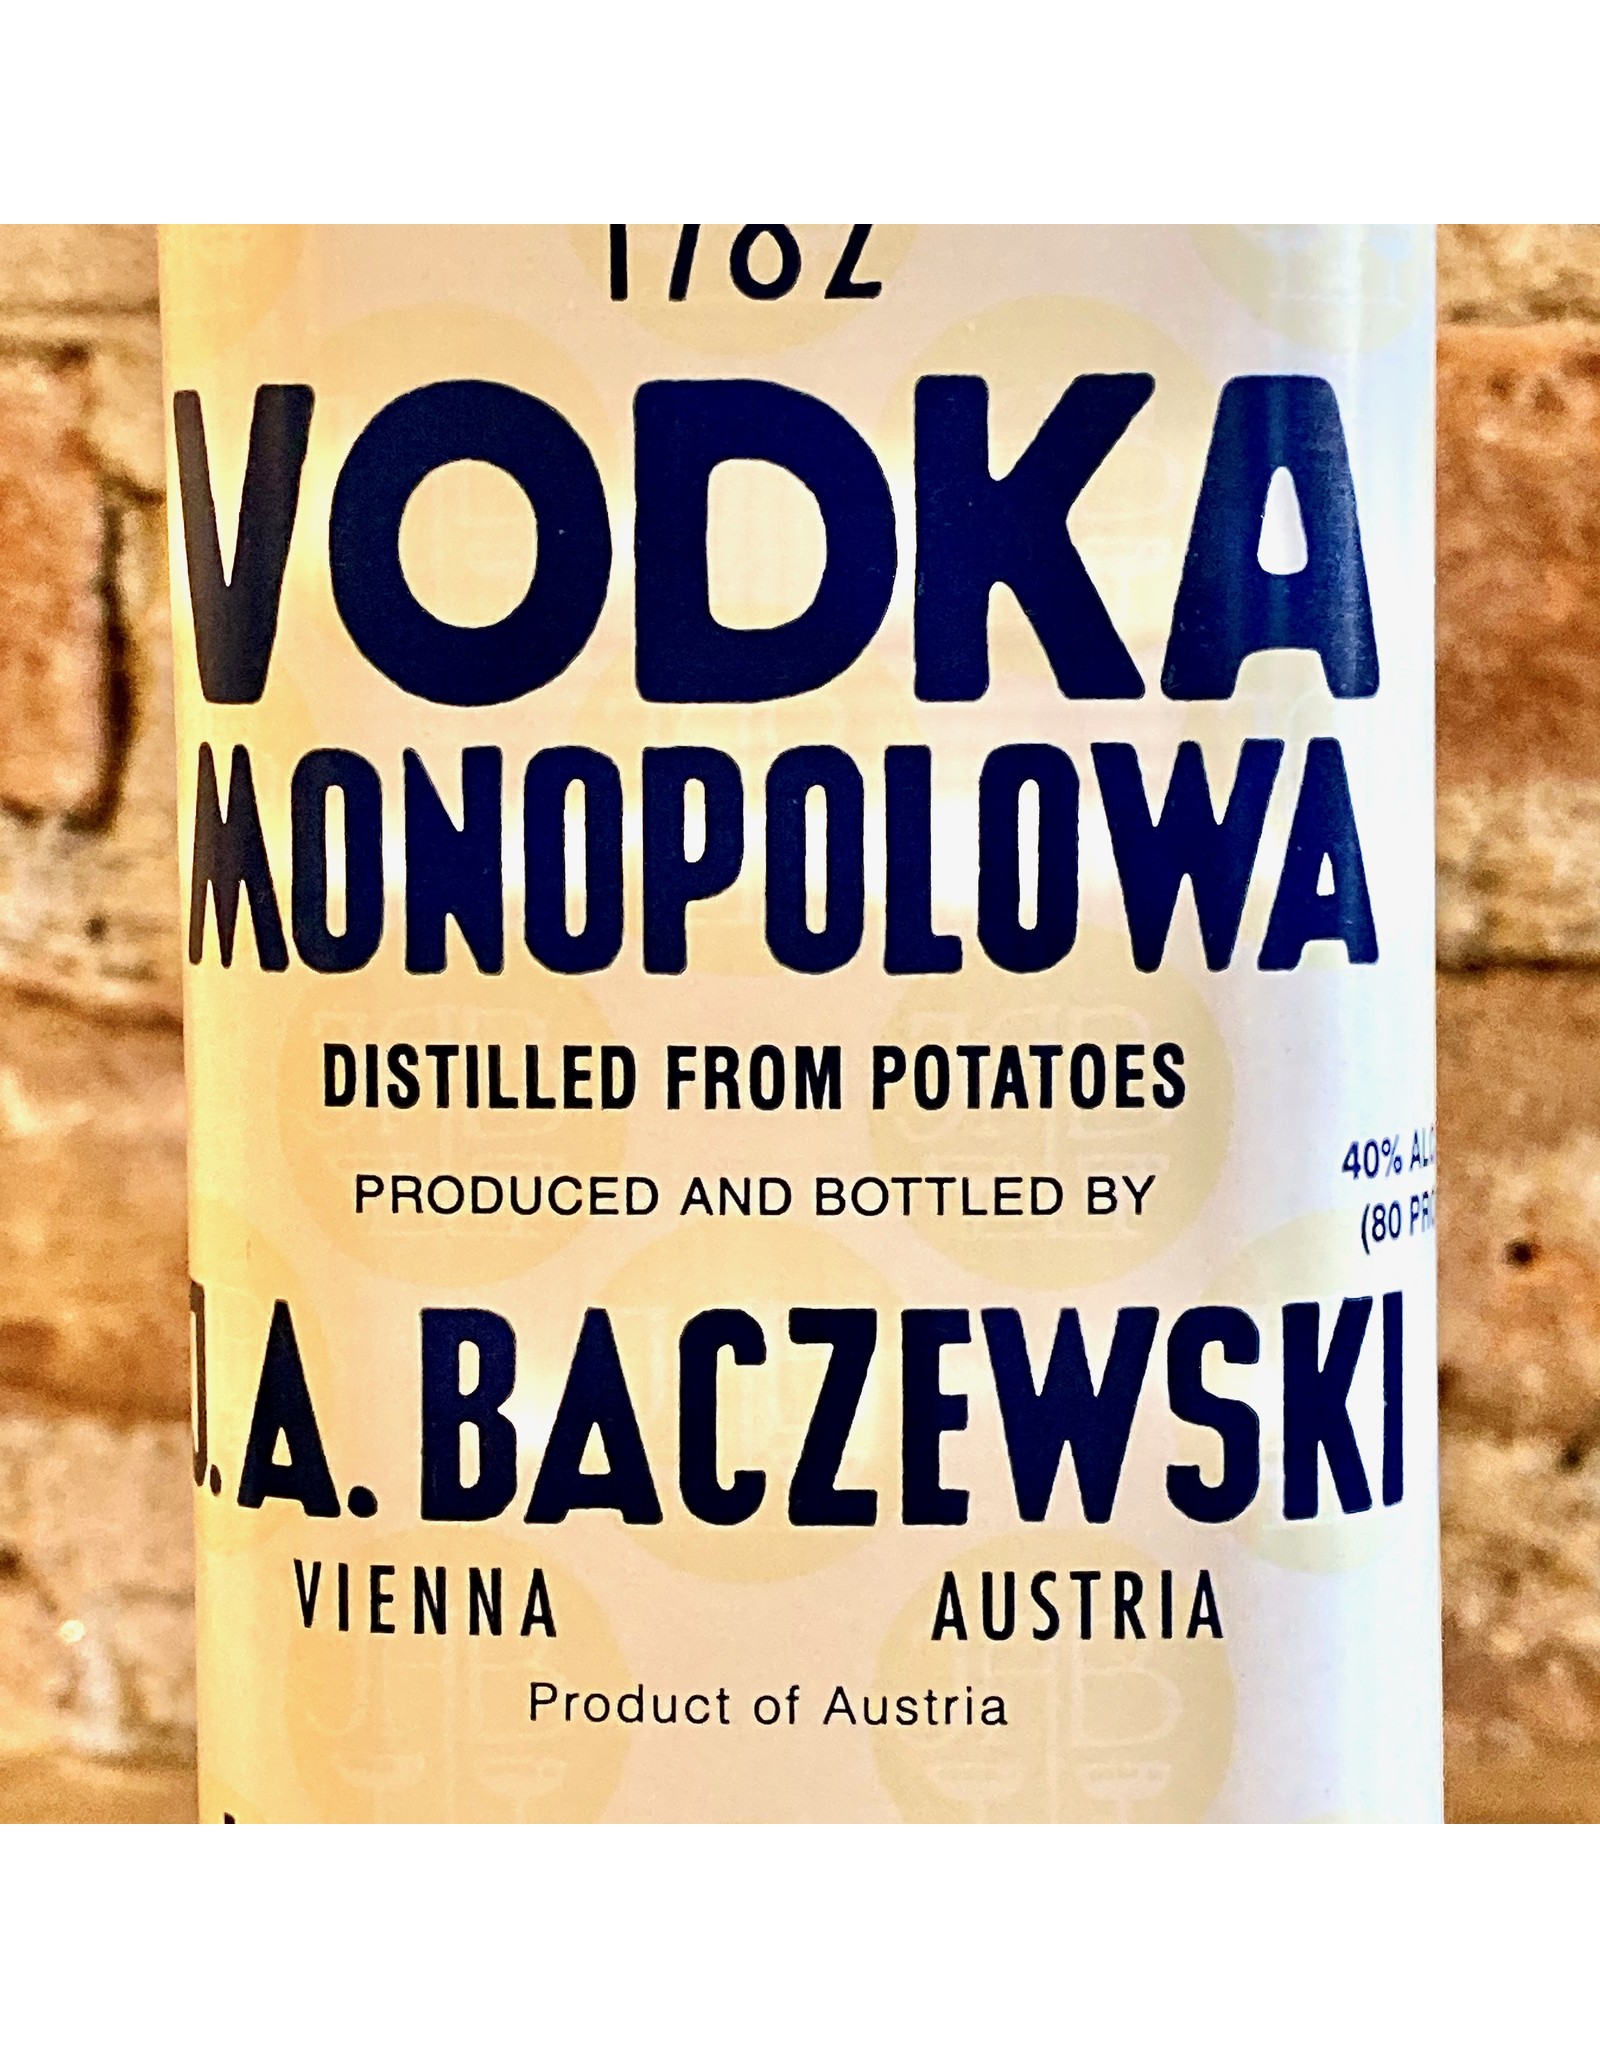 Vodka, Vienna, 'Monopolowa,' Baczewski